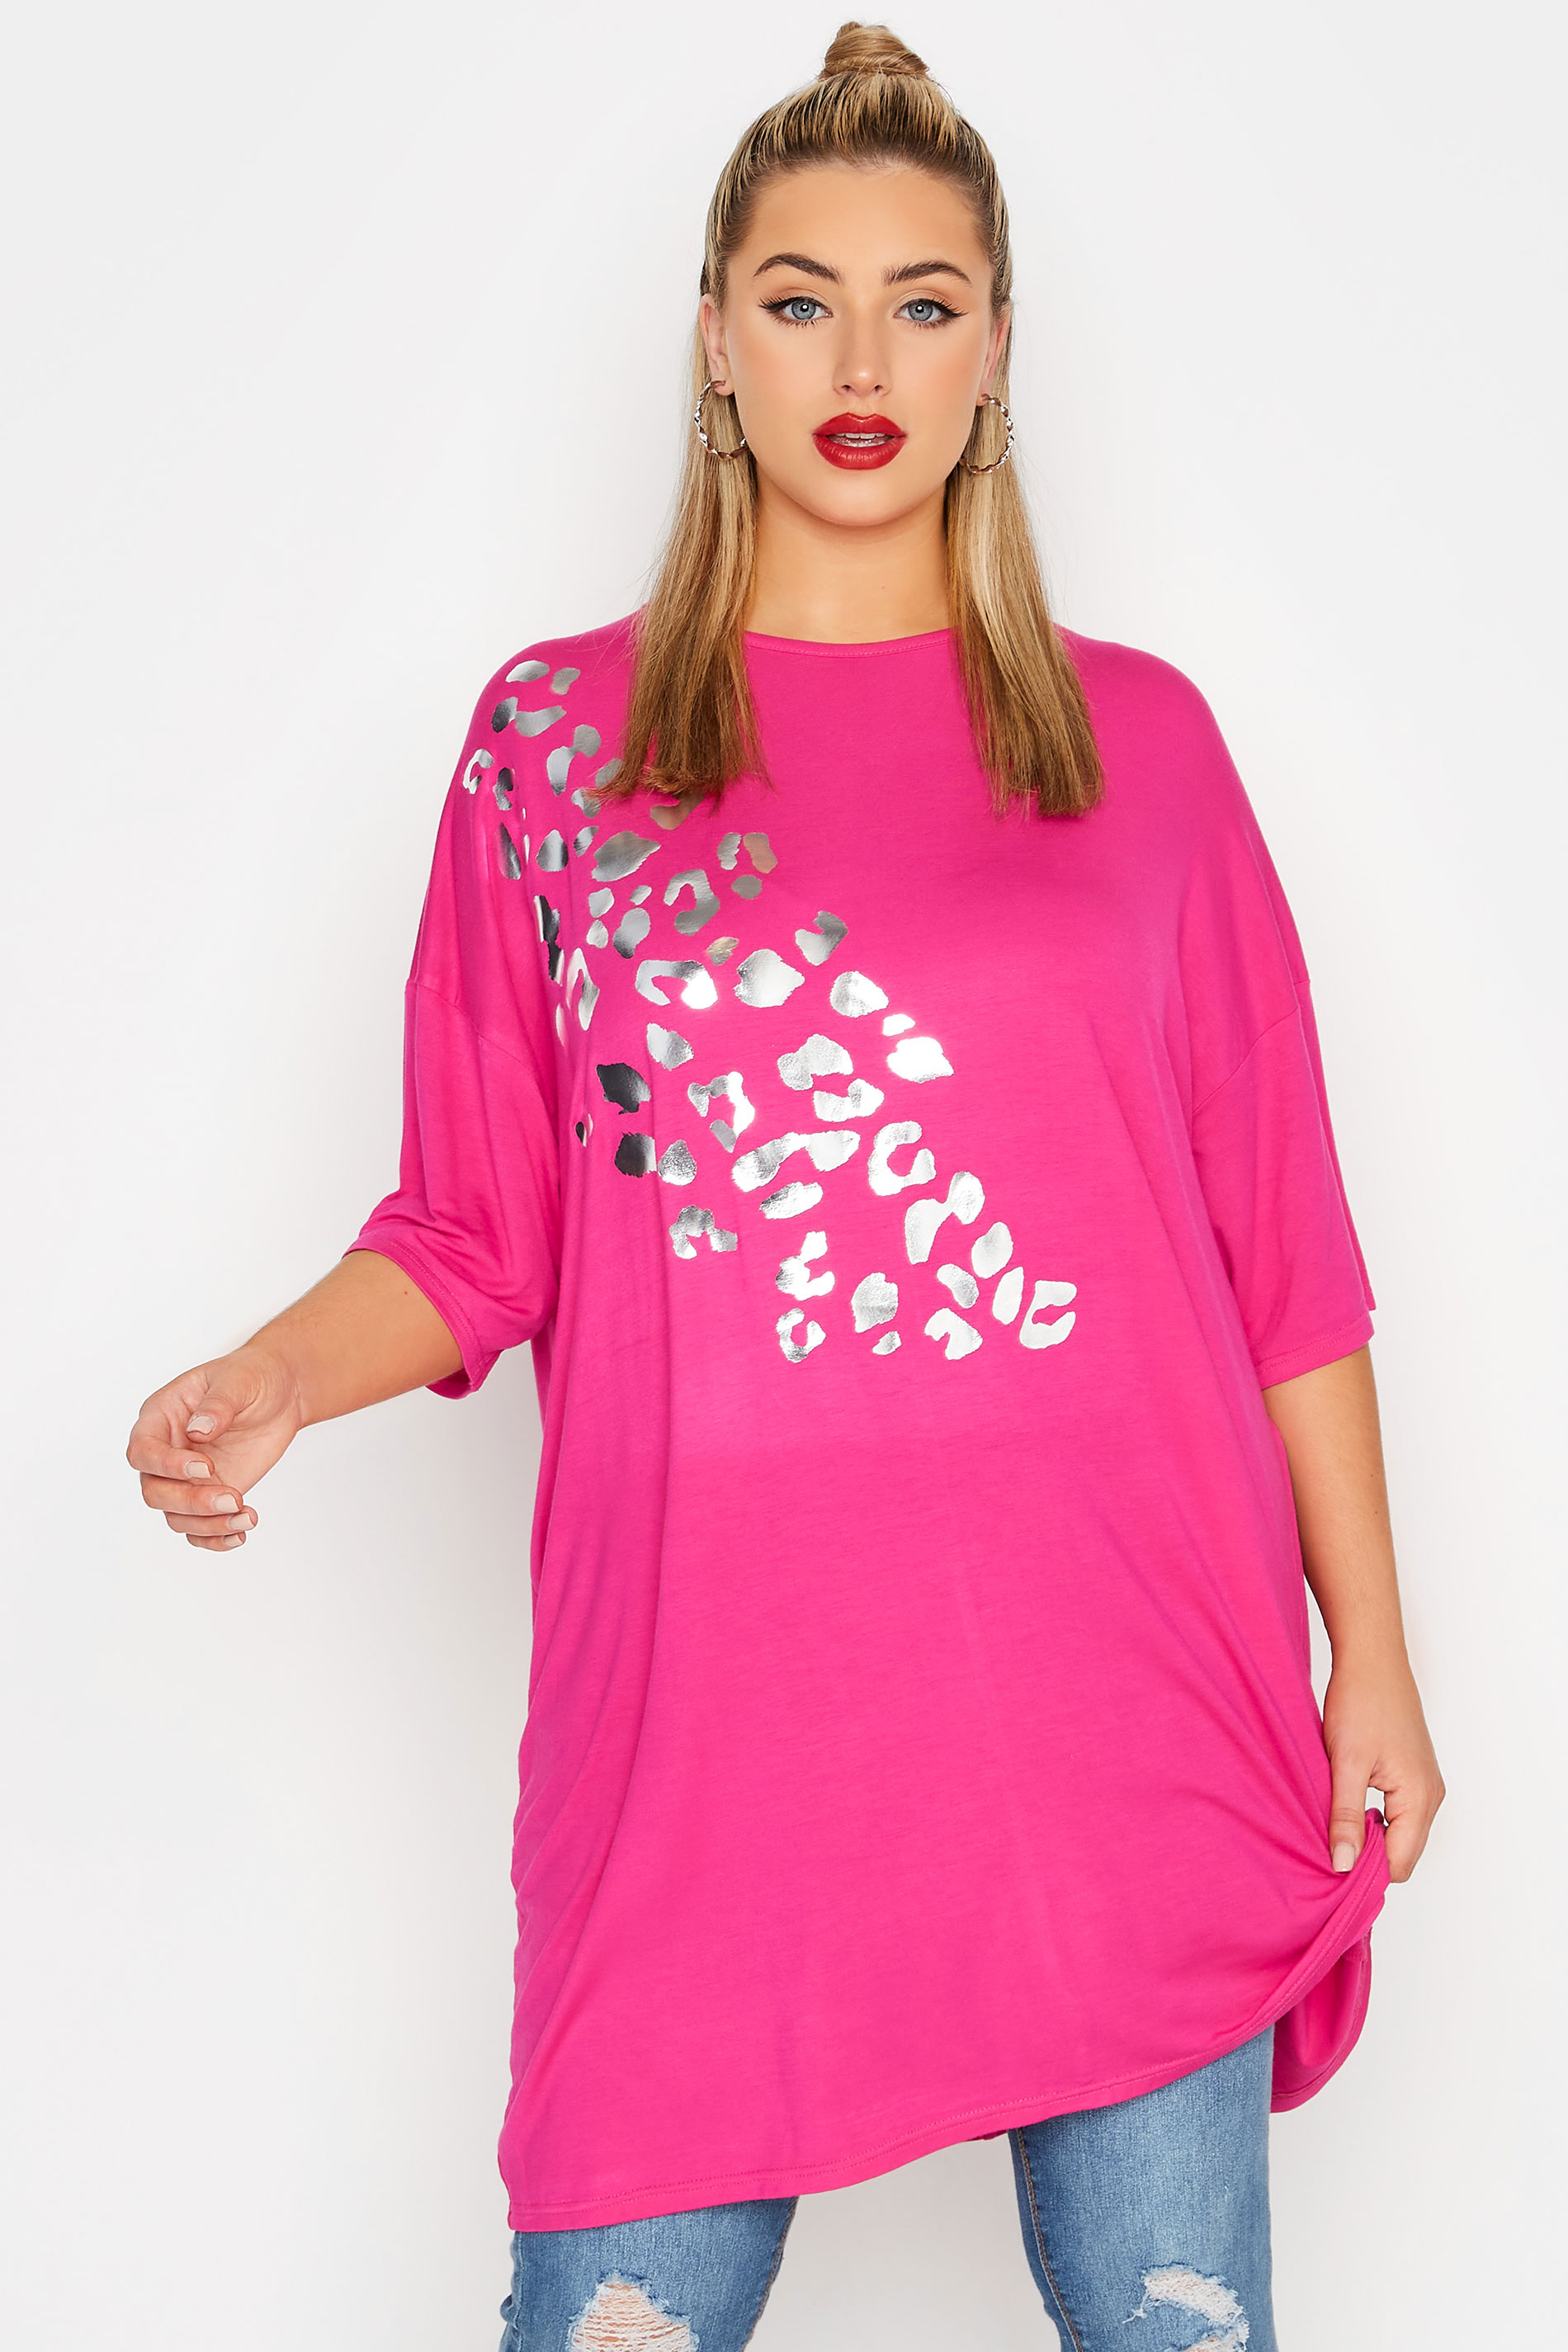 Grande taille  Tops Grande taille  T-Shirts | LIMITED COLLECTION - T-Shirt Rose Bonbon Léopard Argenté - OS31818